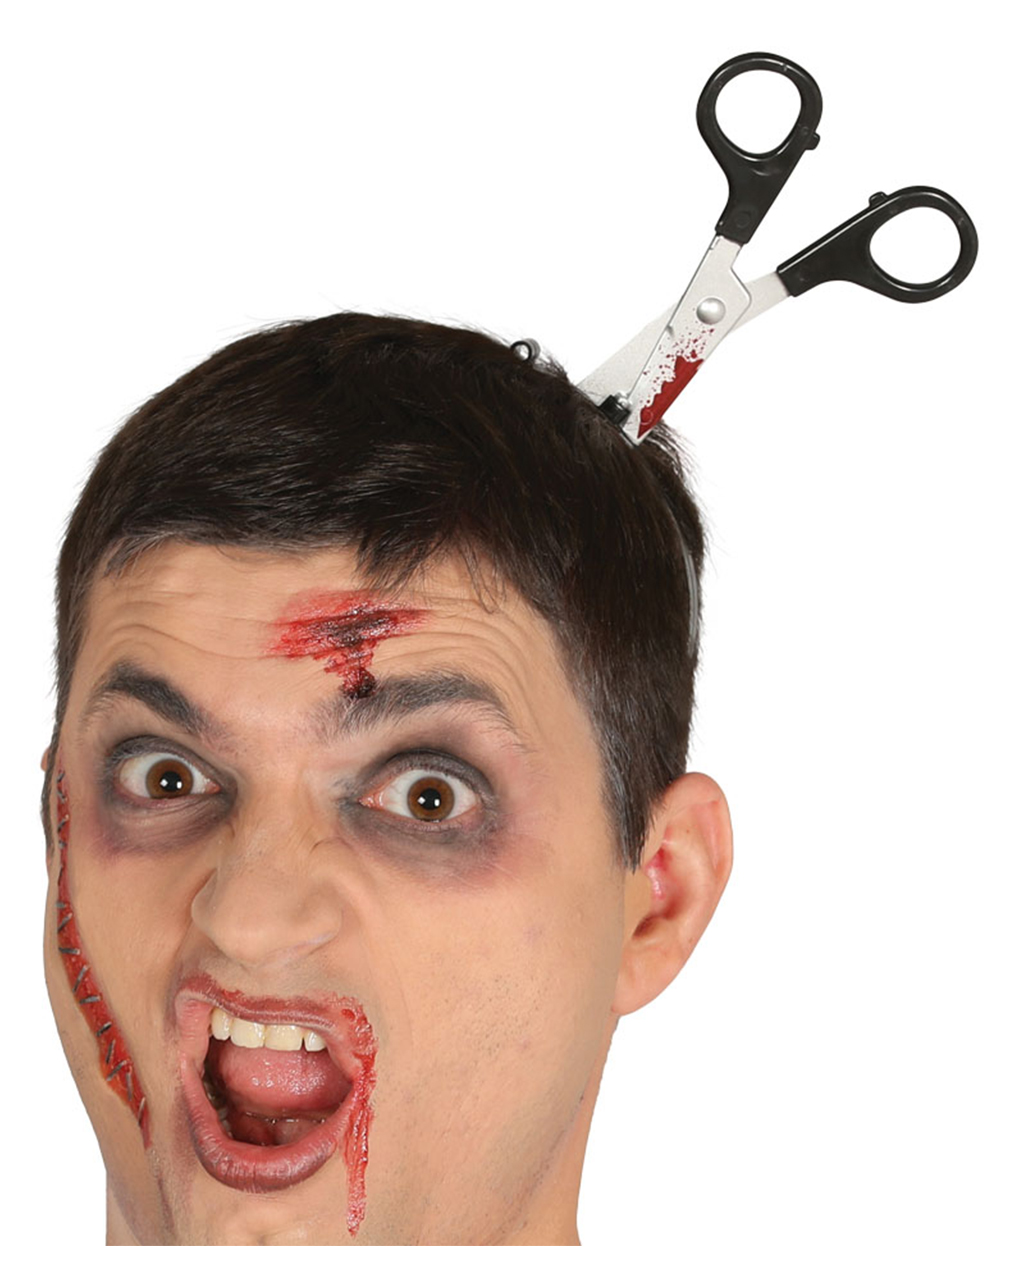 Axe Saw Scissors In-The-Head Headband Halloween Costume Fancy Dress Accessories